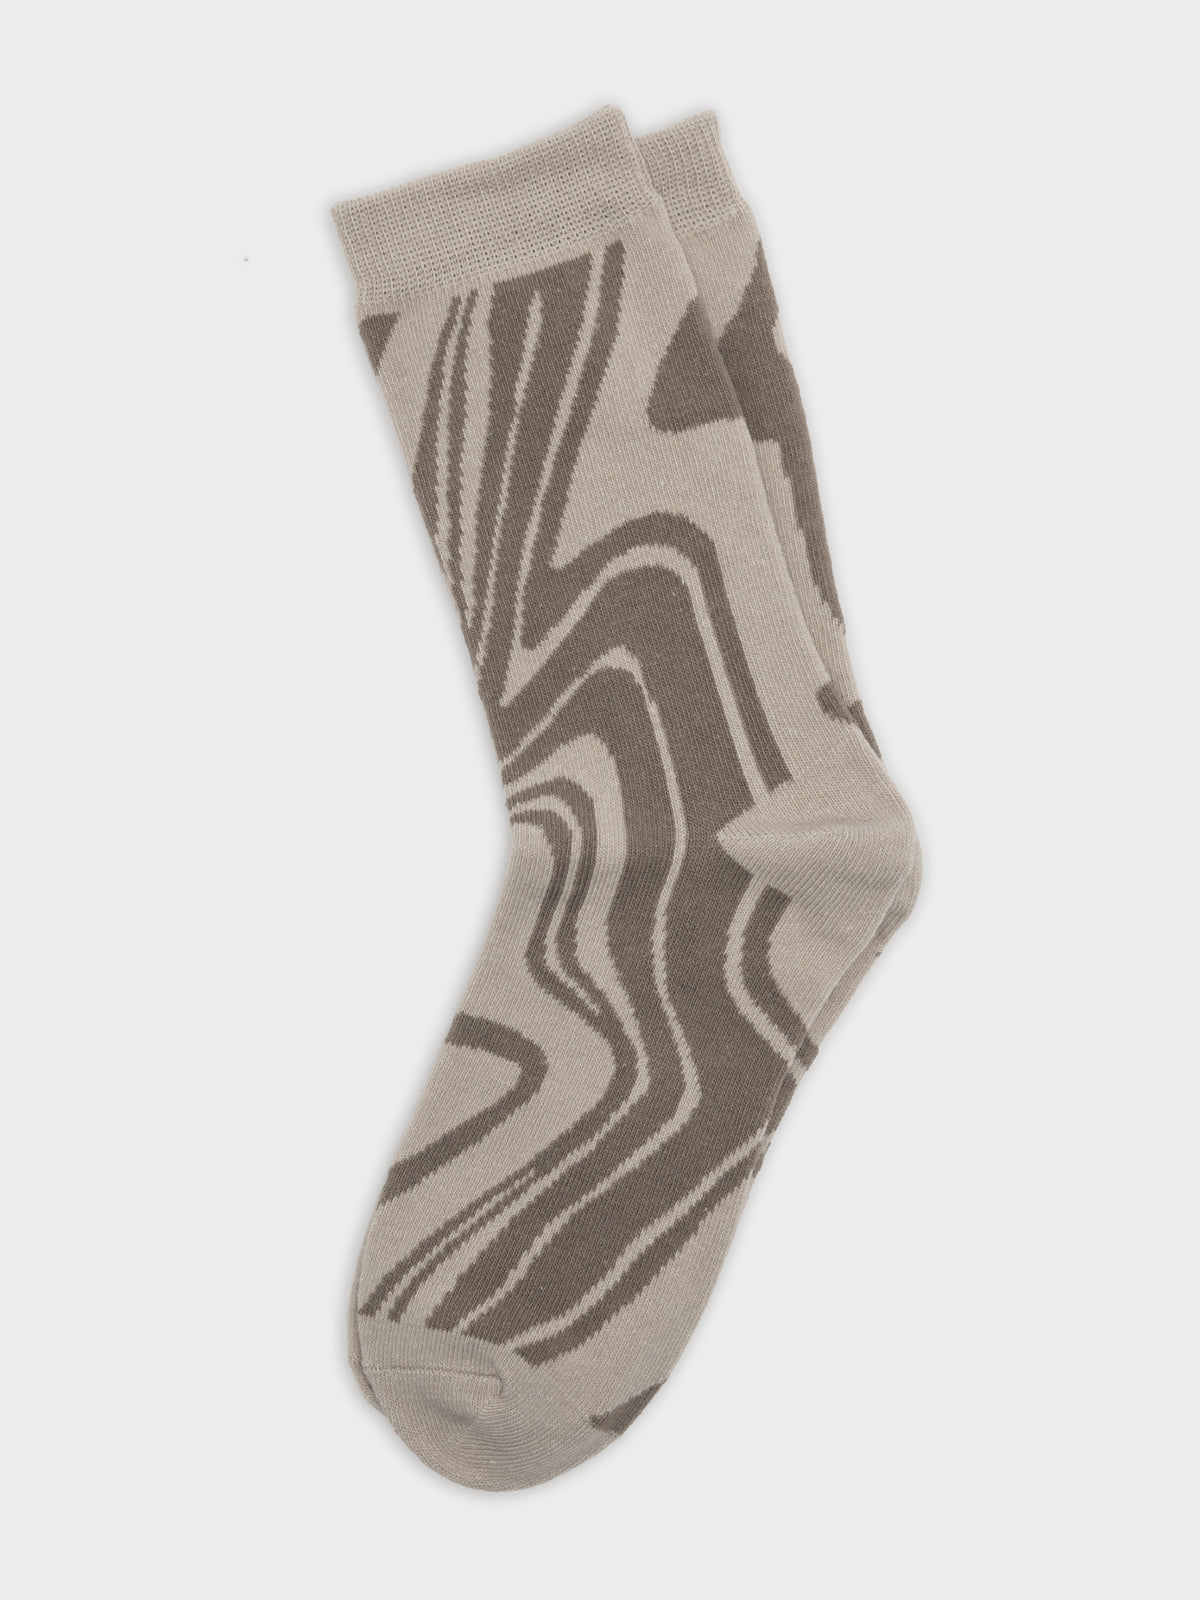 1 Pair of Swirl Socks in Sand